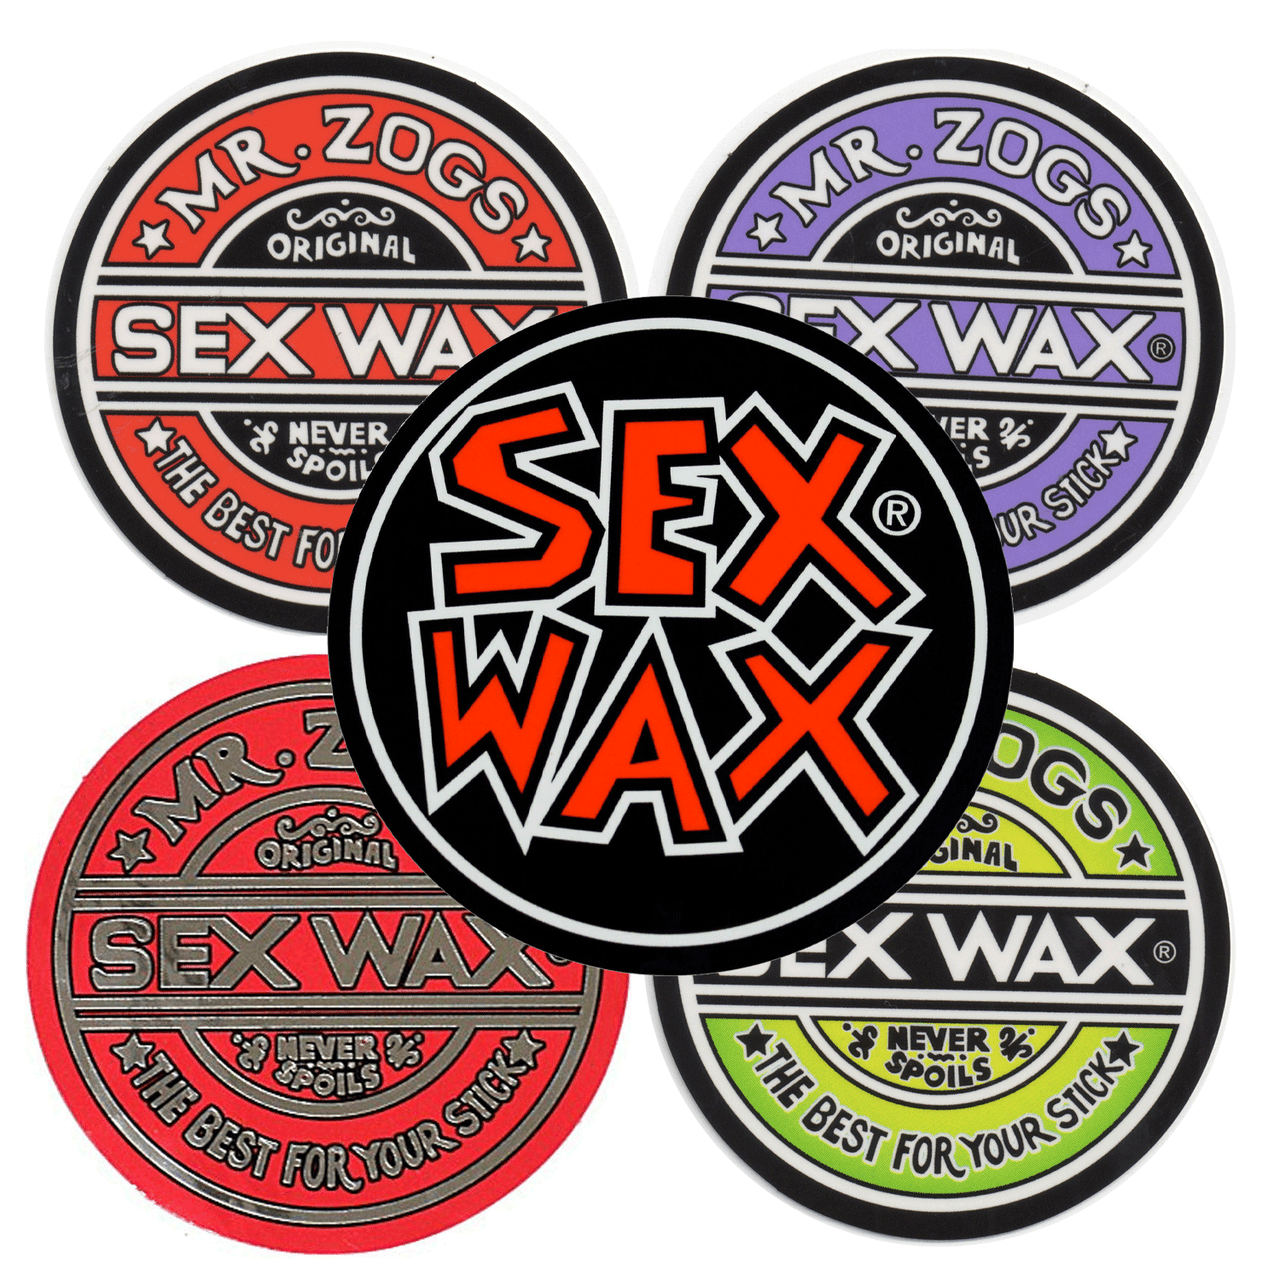 Sex Wax HOCKEY STICK WAX BLUE Mr. Zogs PACK OF 2